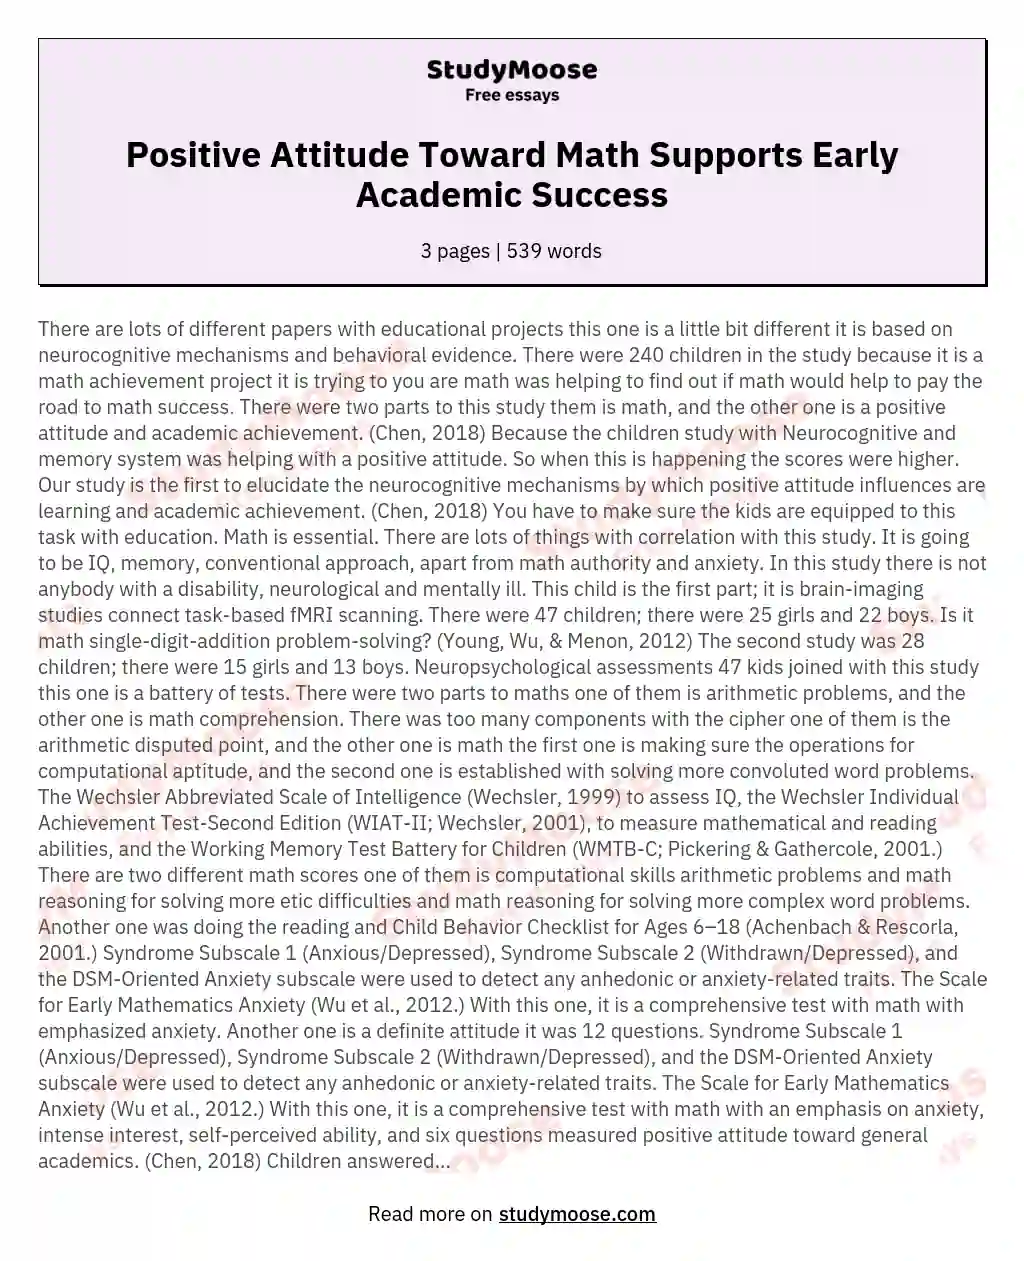 Positive Attitude Toward Math Supports Early Academic Success essay